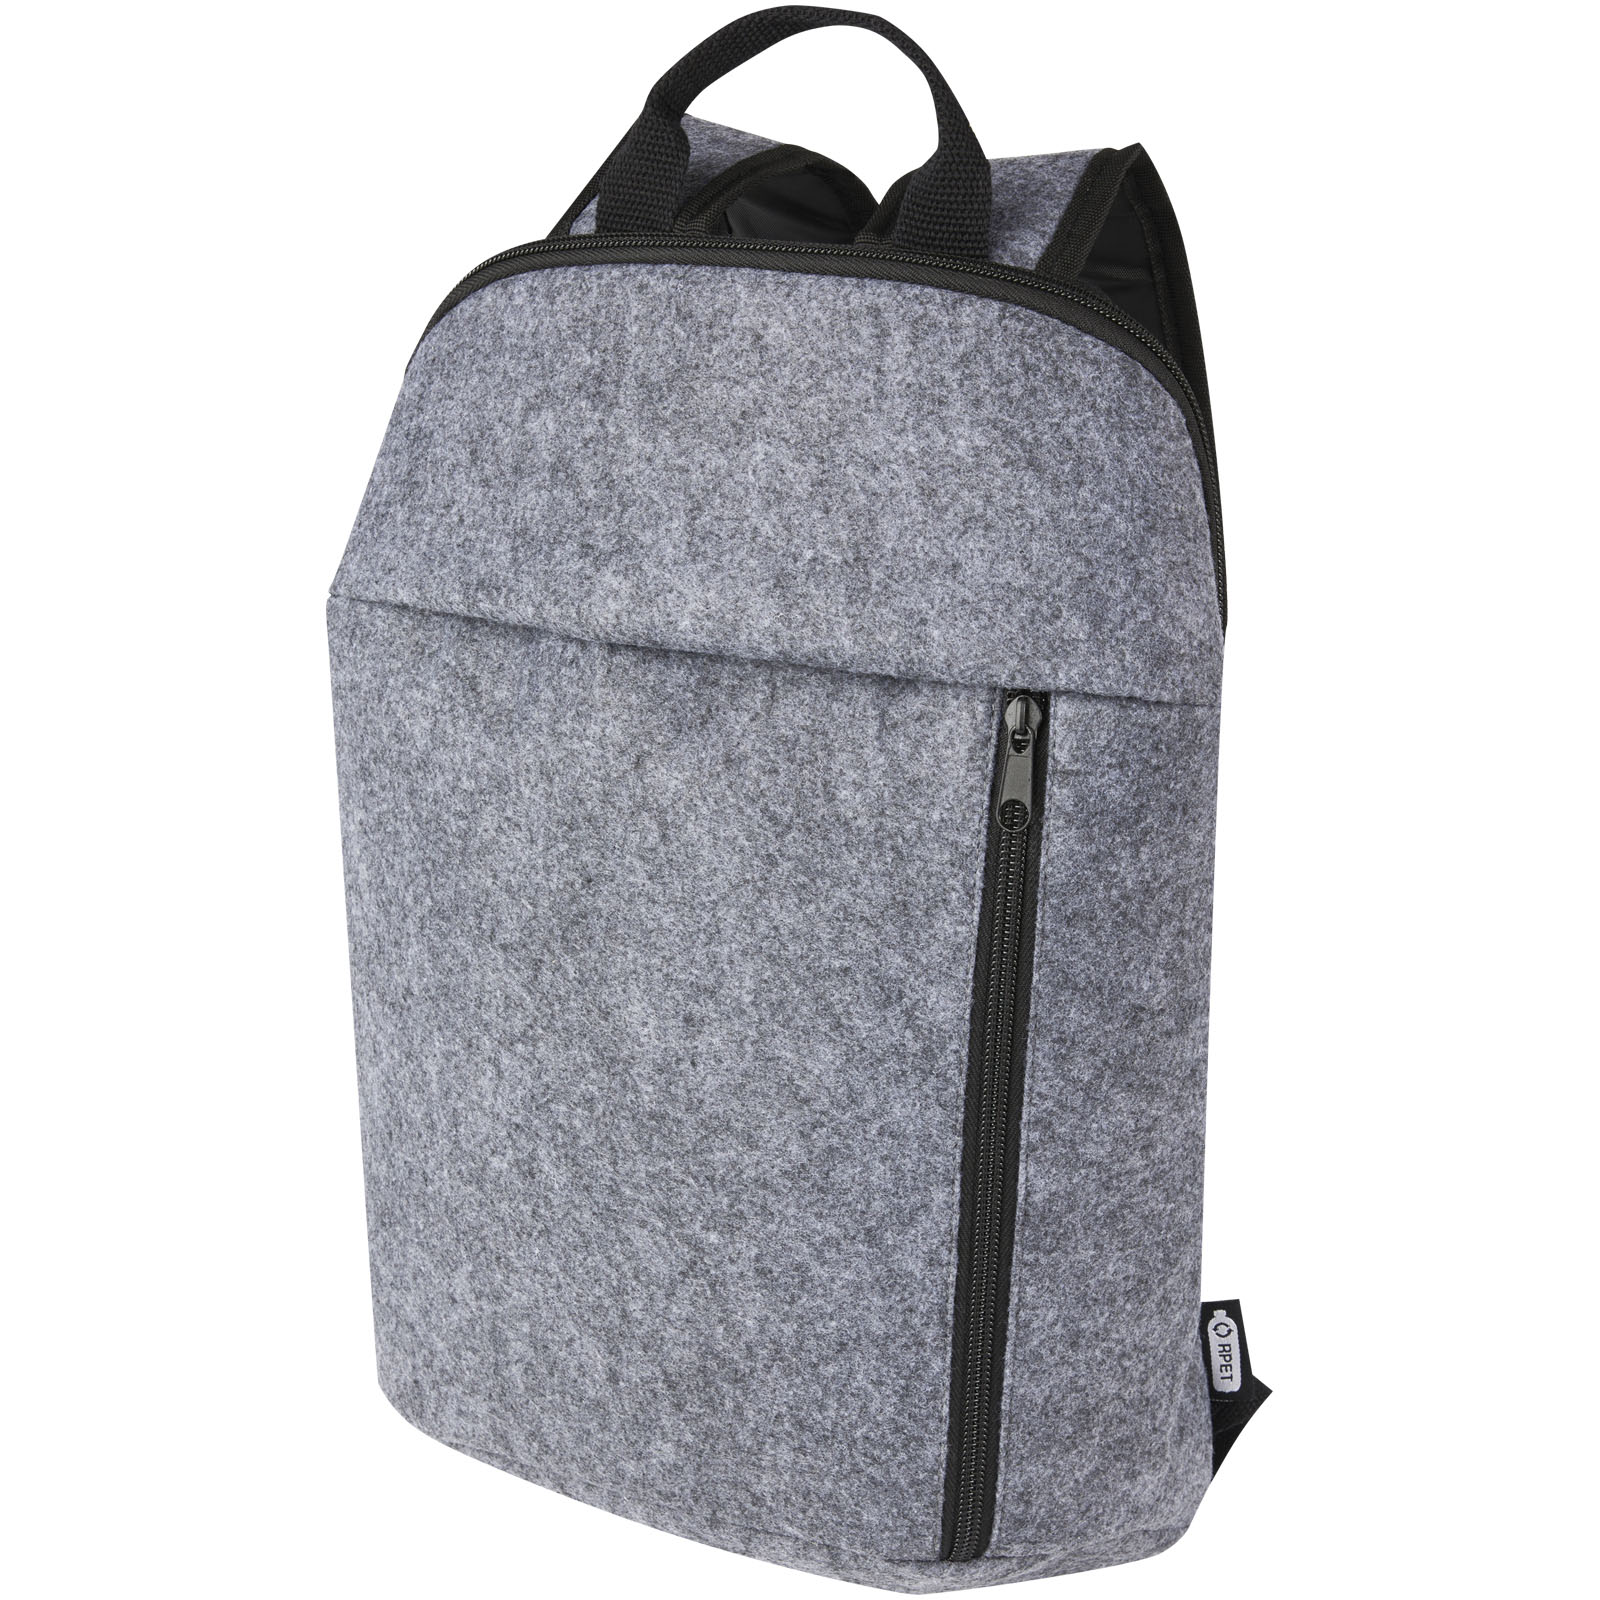 Bags - Felta GRS recycled felt cooler backpack 7L